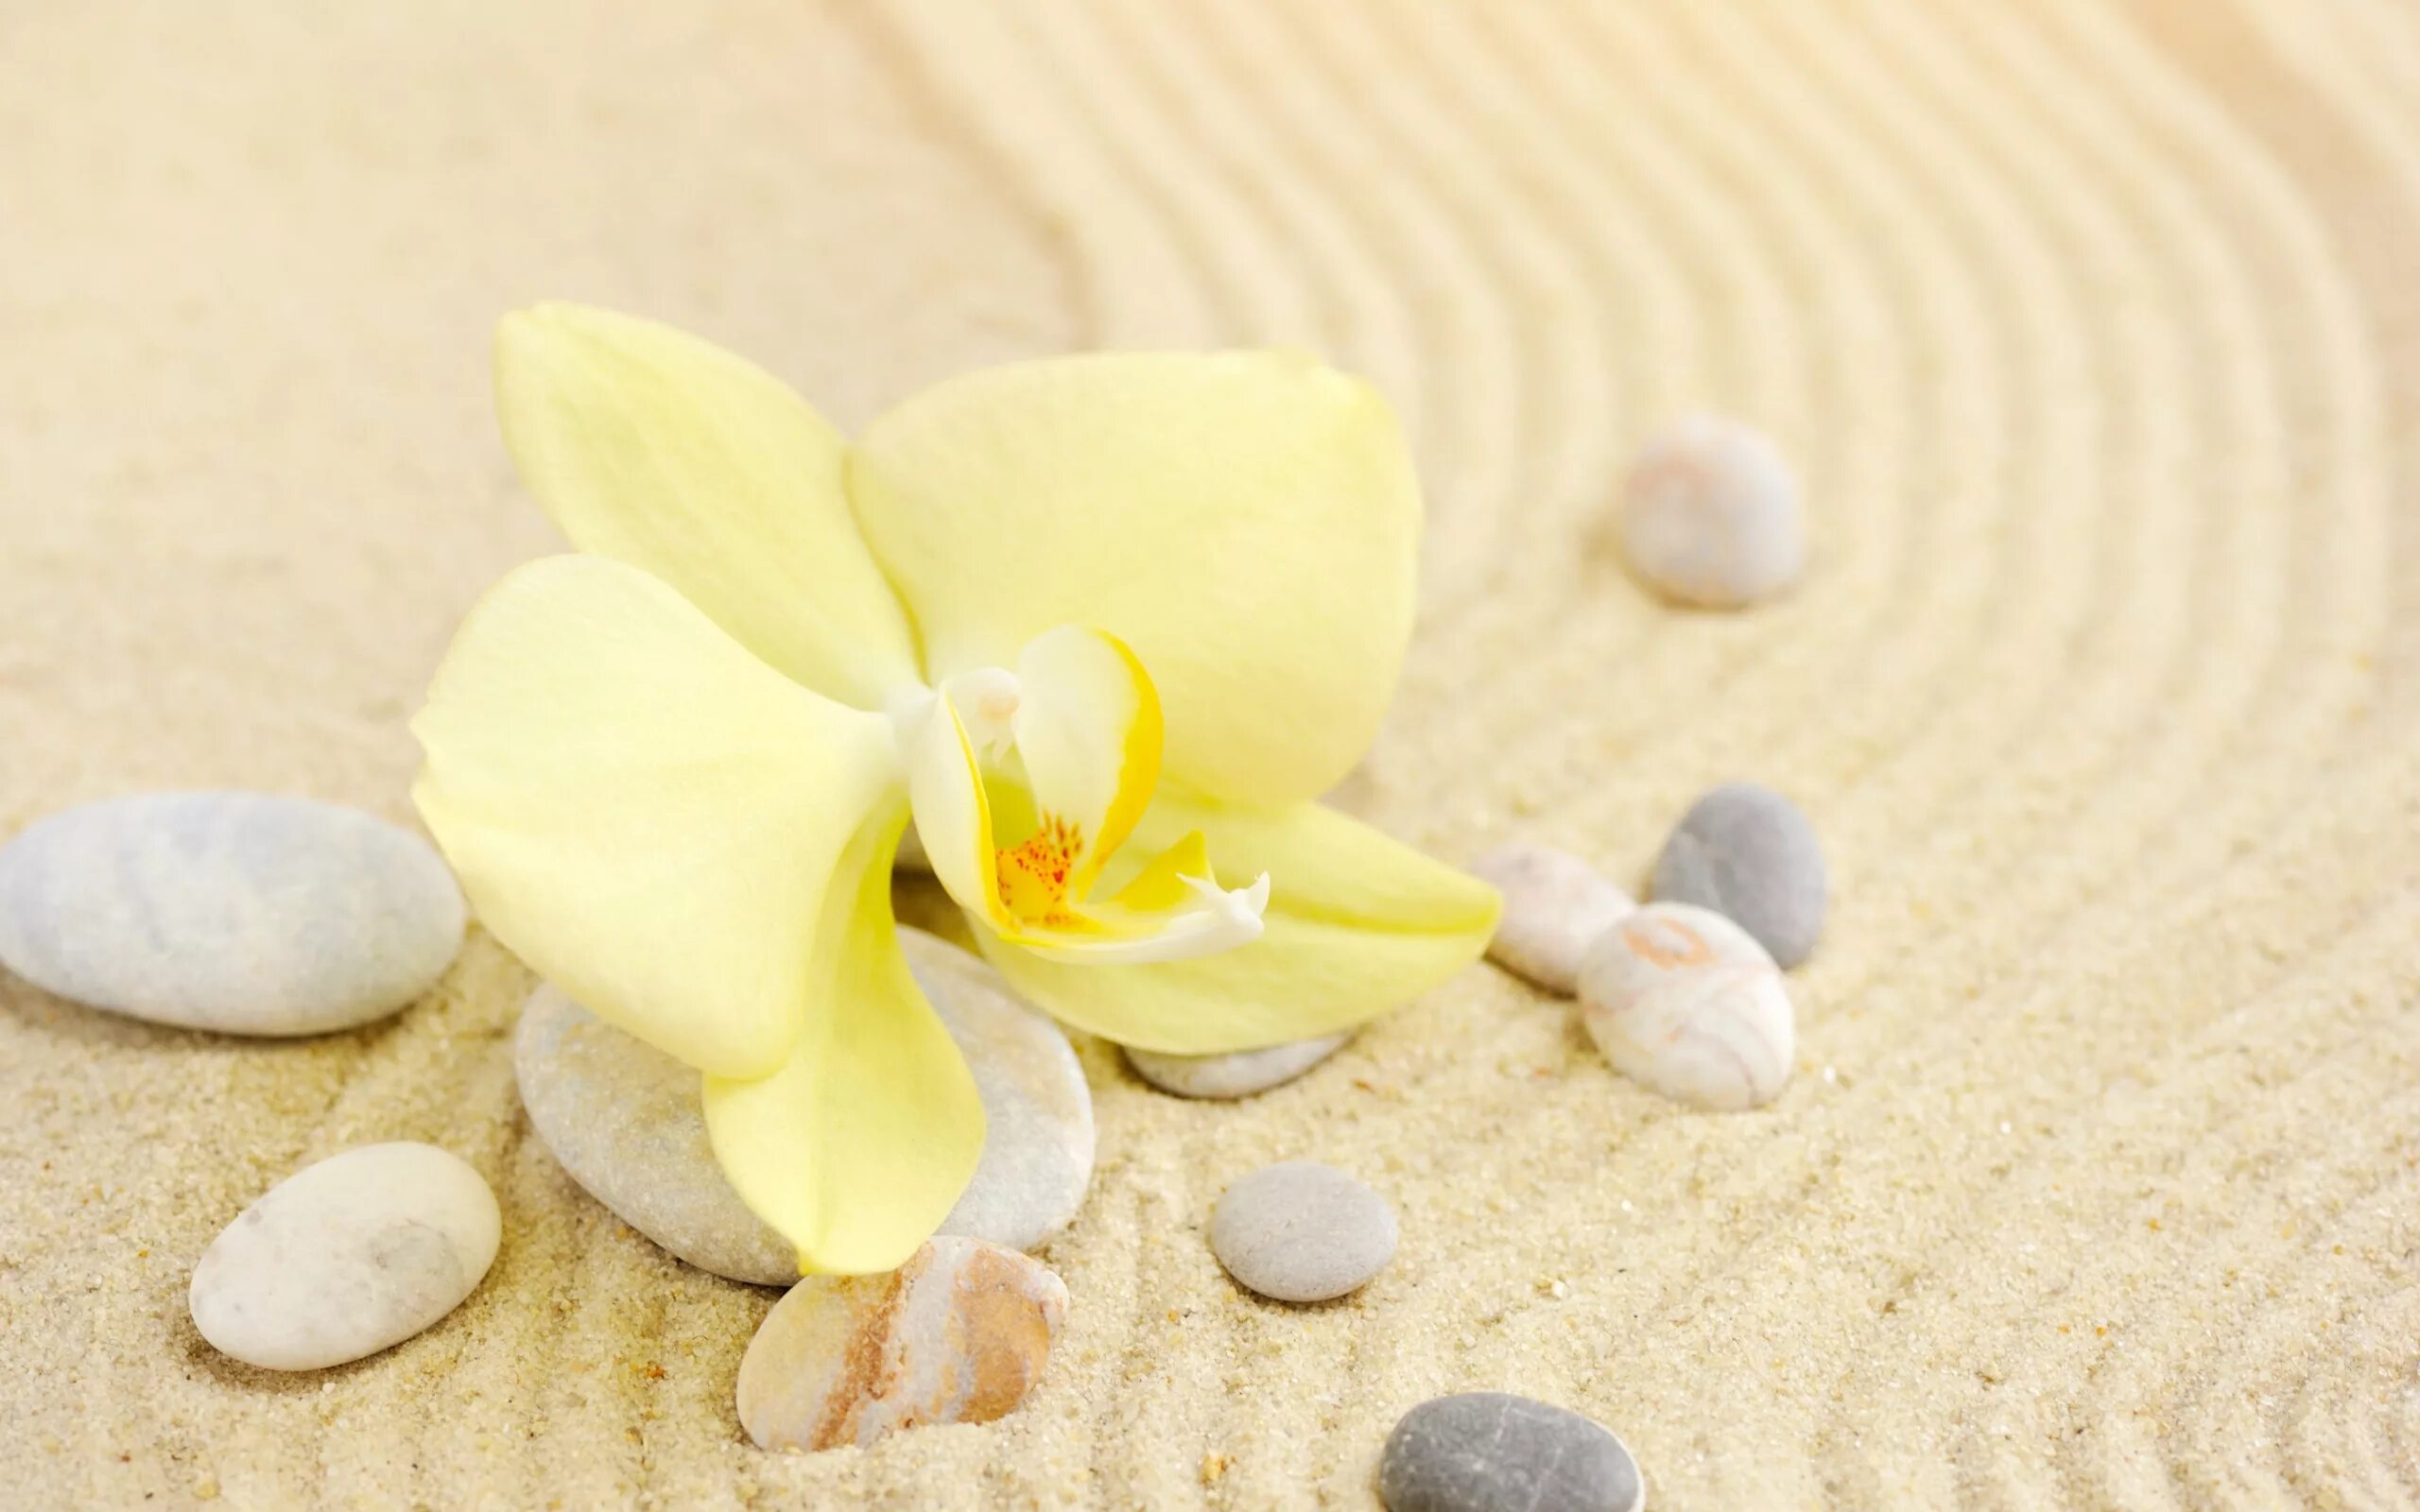 Релакс цвет. Ракушки море цветы. Камни ракушки на песке. Море песок цветы. Орхидея и камни.